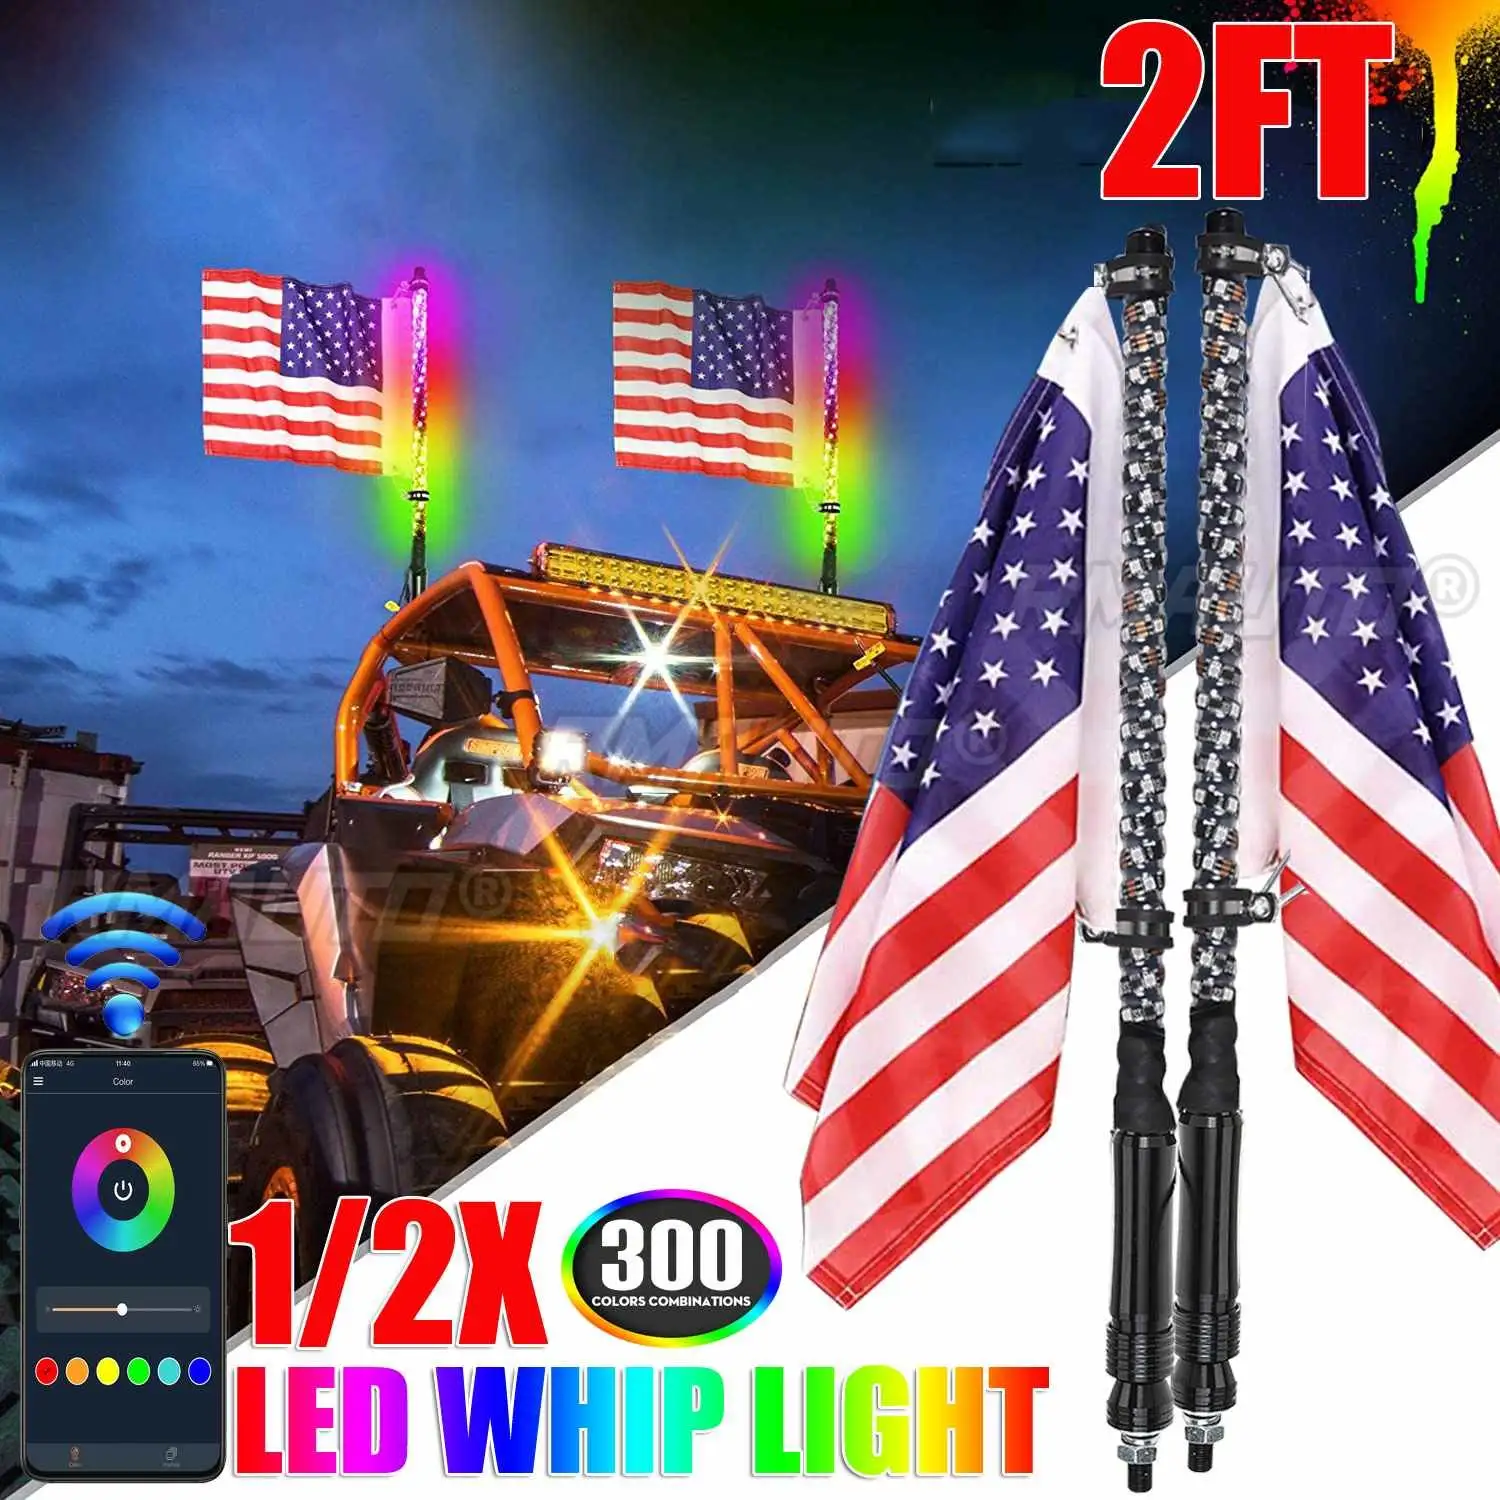 2FT LED Whip Light RGB Waterproof Bendable Remote Control Multi-color Super Bright Flagpole Lamp Light Antenna for SUV ATV UTV